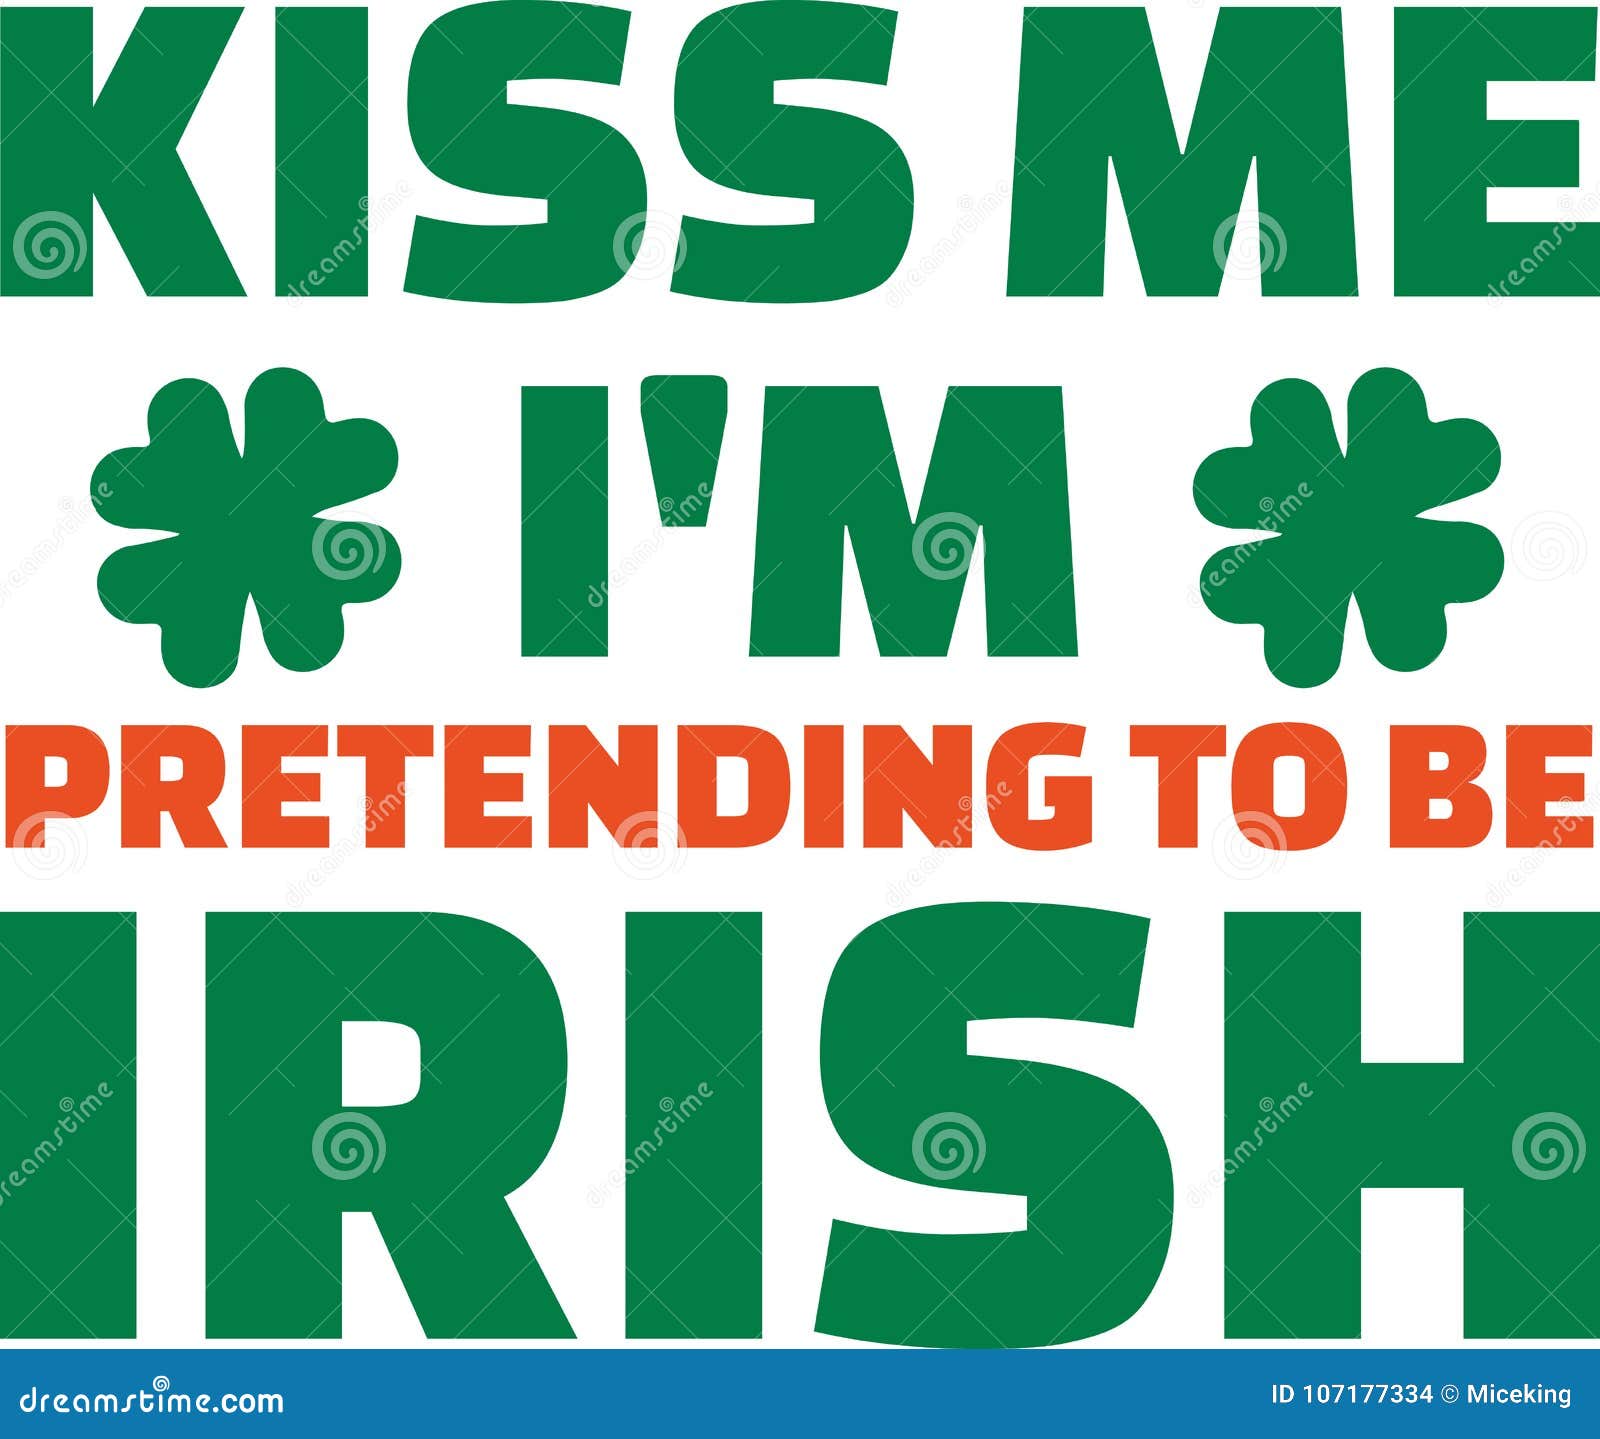 kiss me i`m pretending to be irish - text